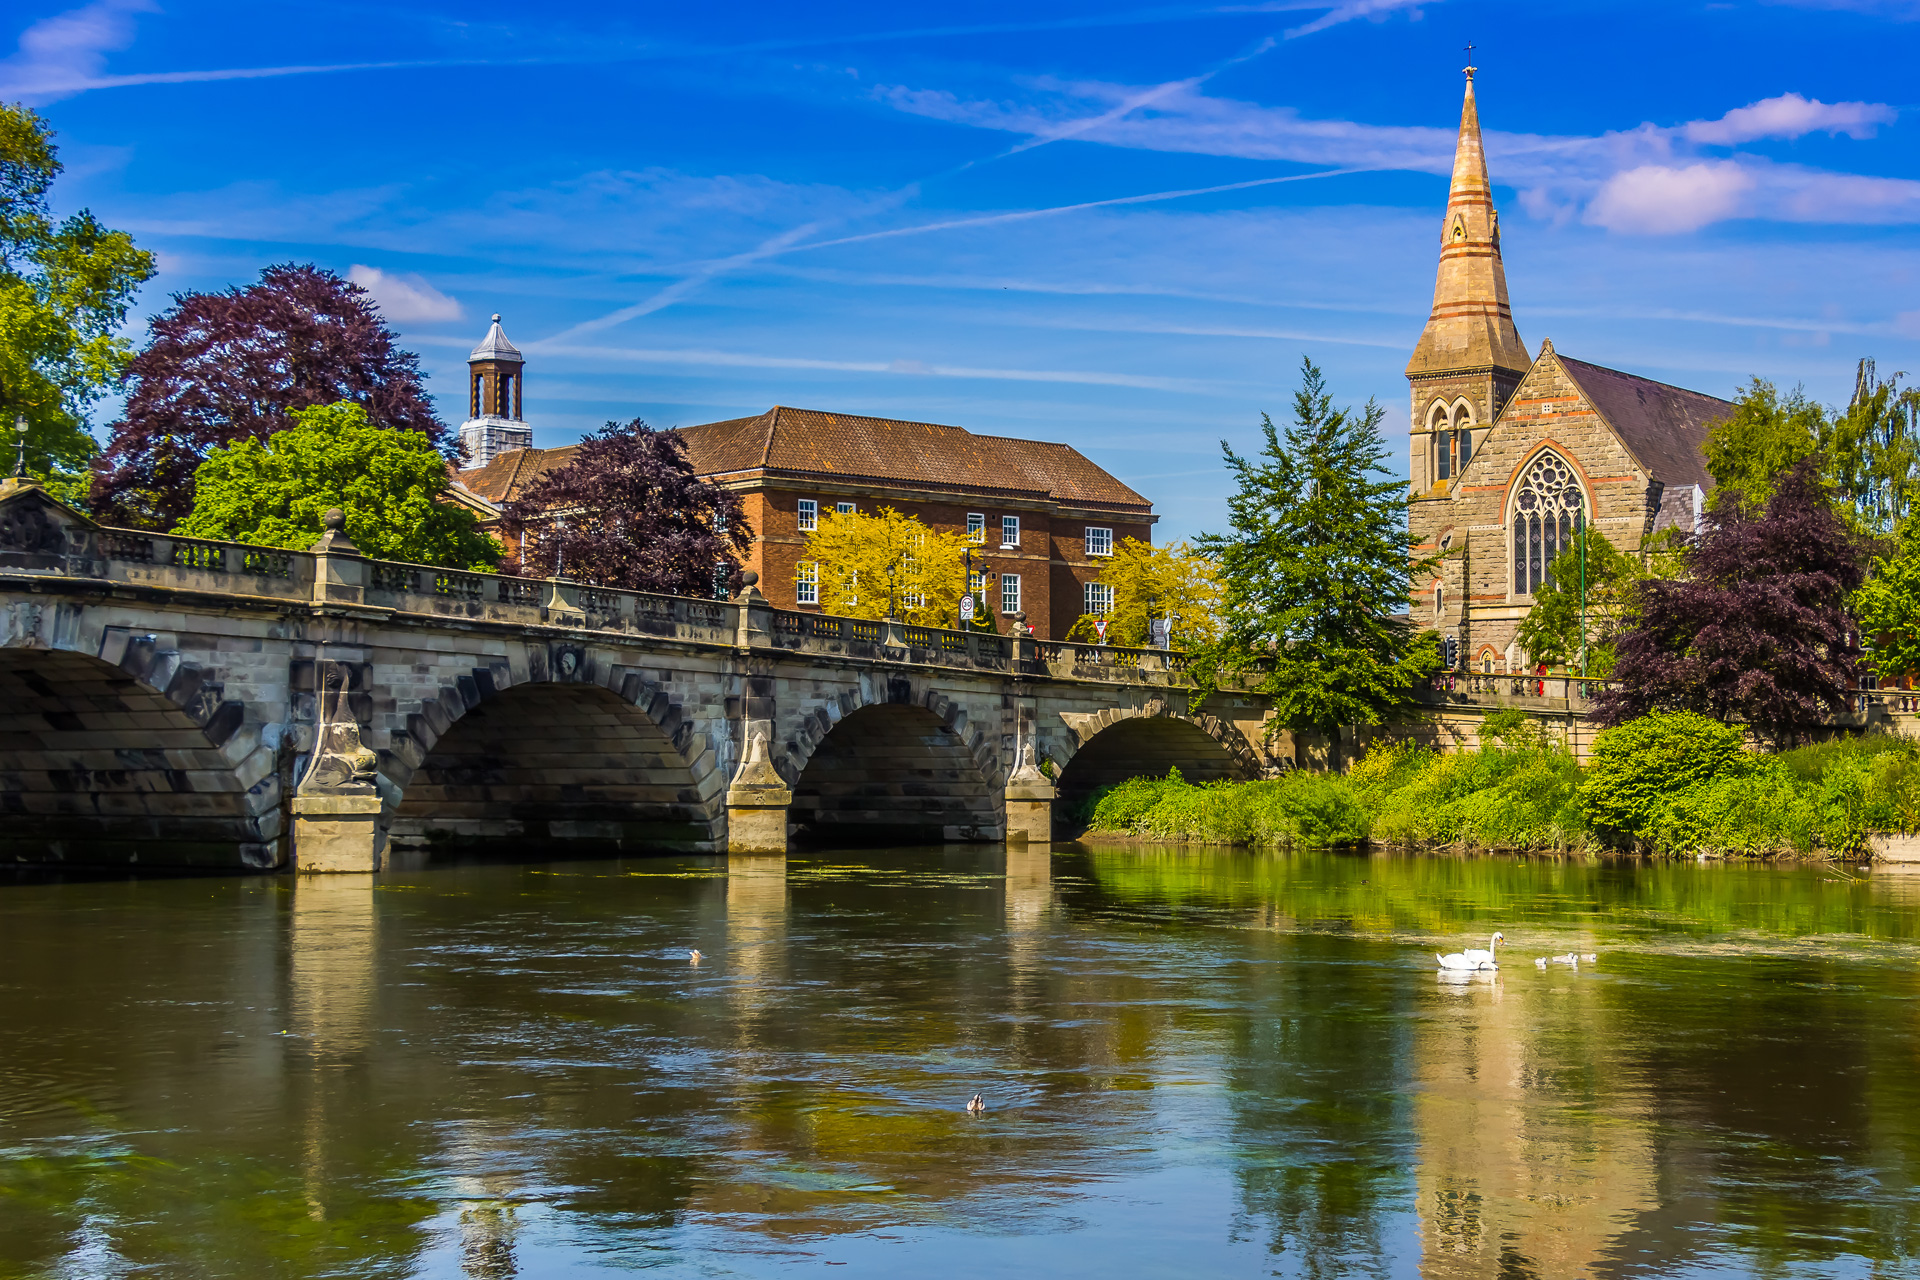 A bridge in Shrewsbury